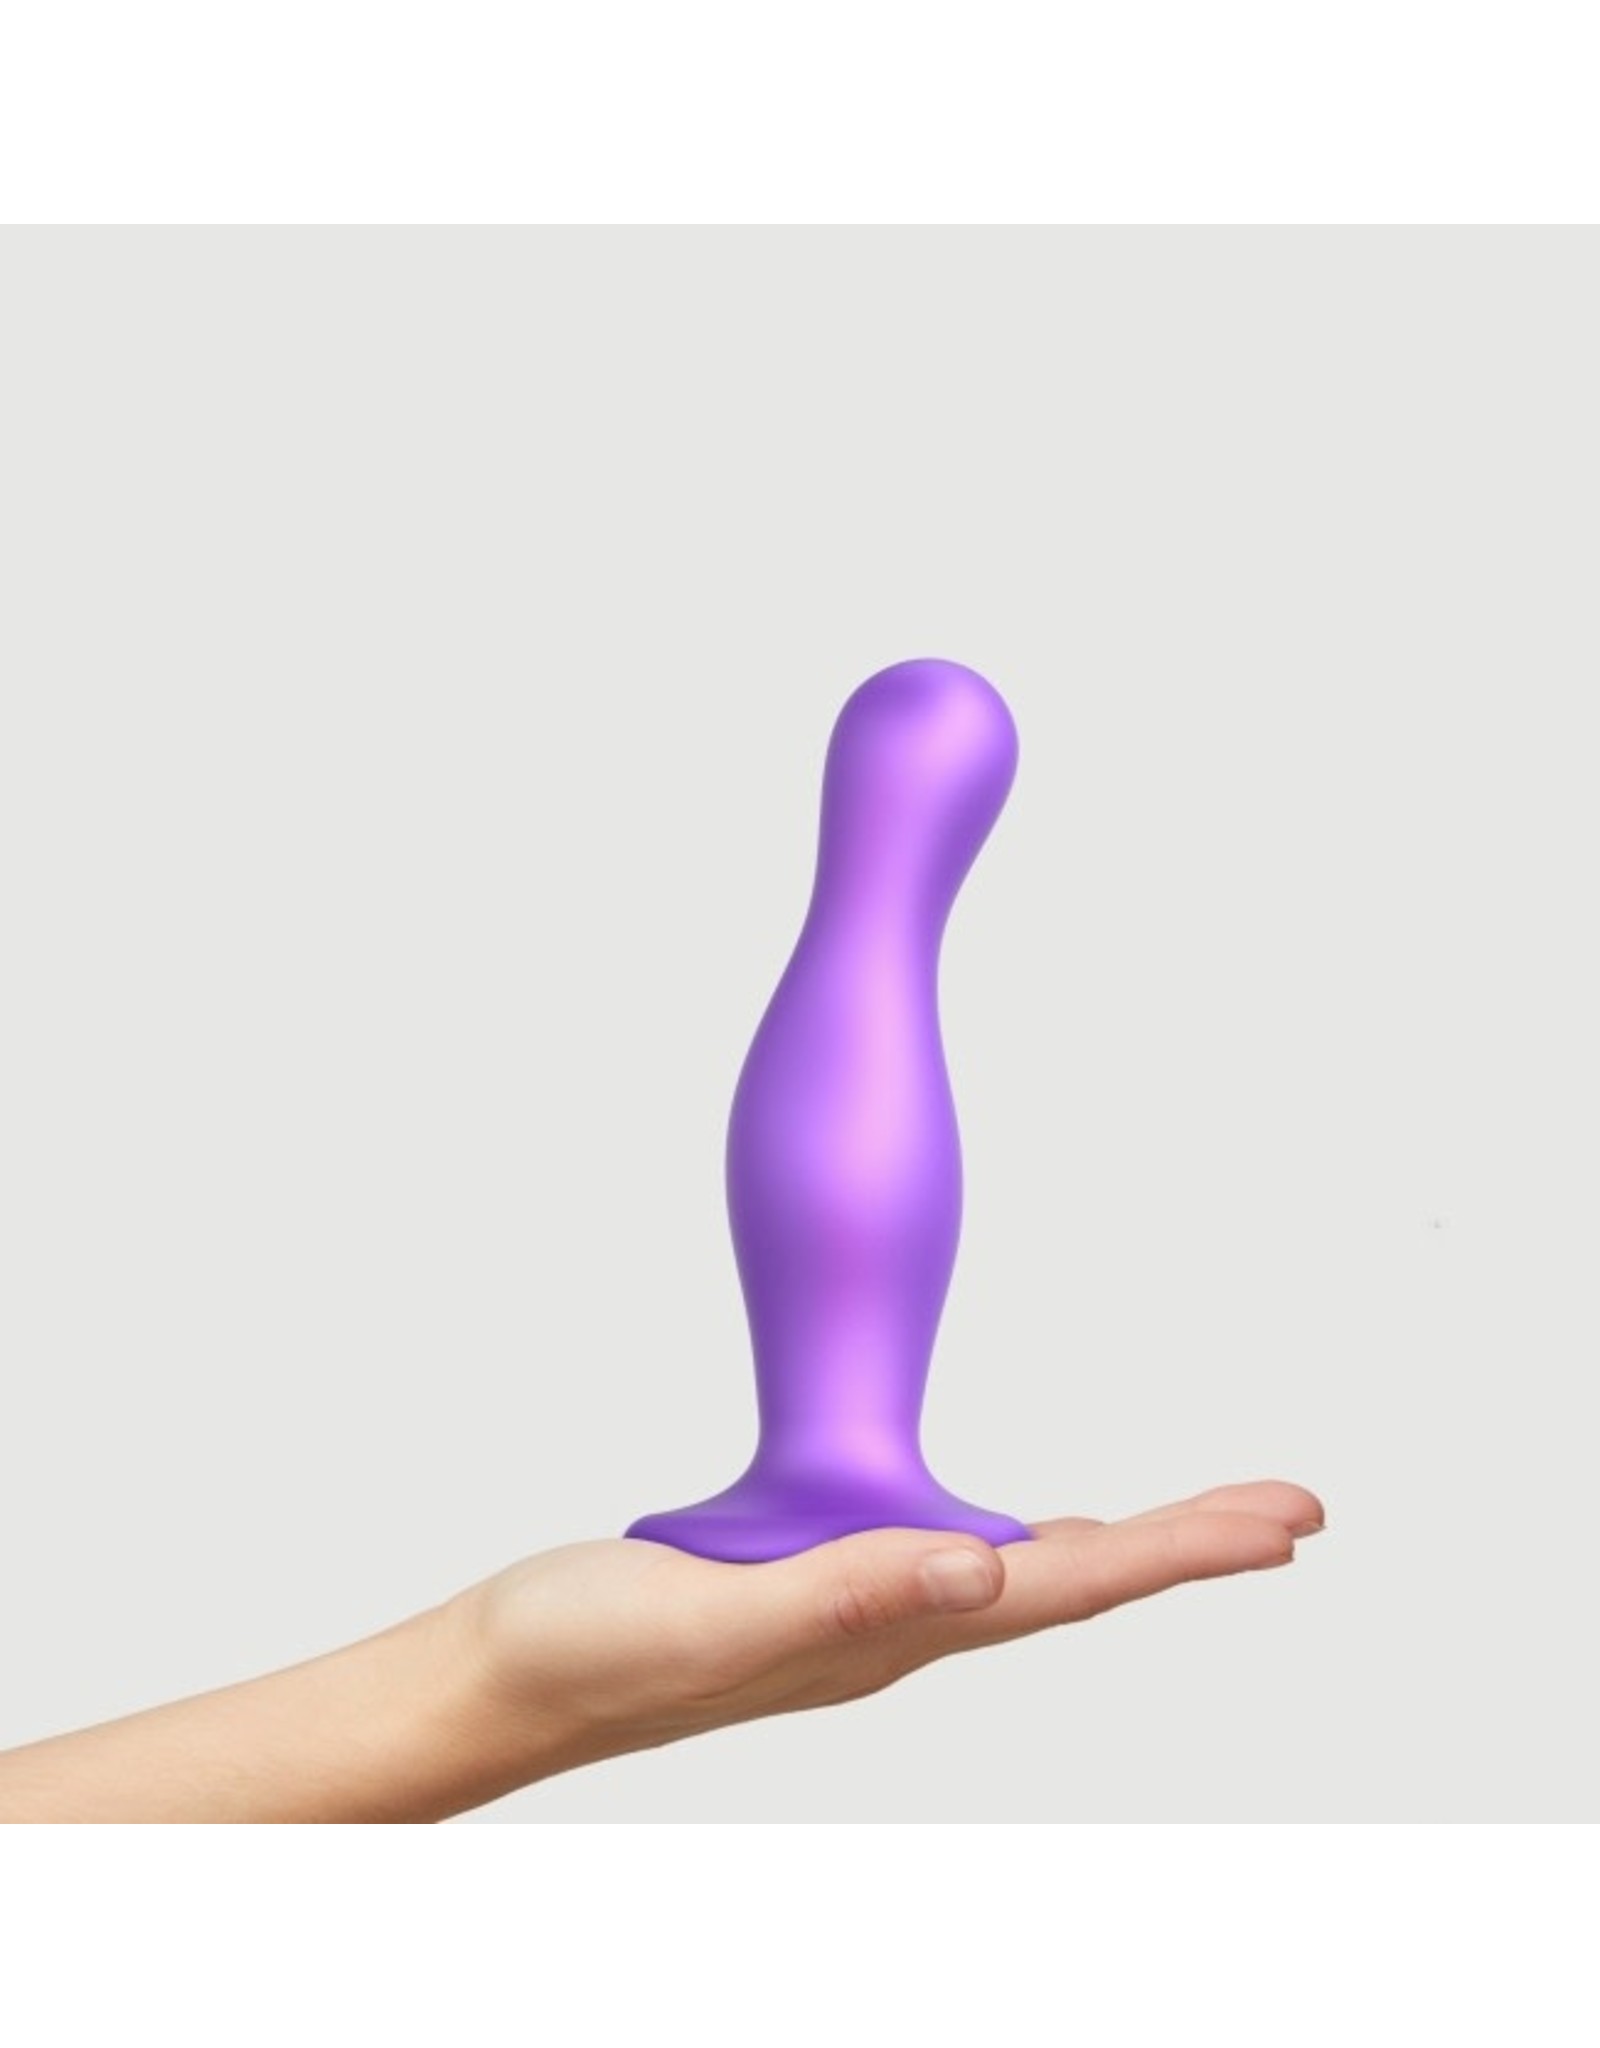 Strap-on-me by Lovely Planet StrapOnMe - Dildo Plug Curvy Size L (purple)